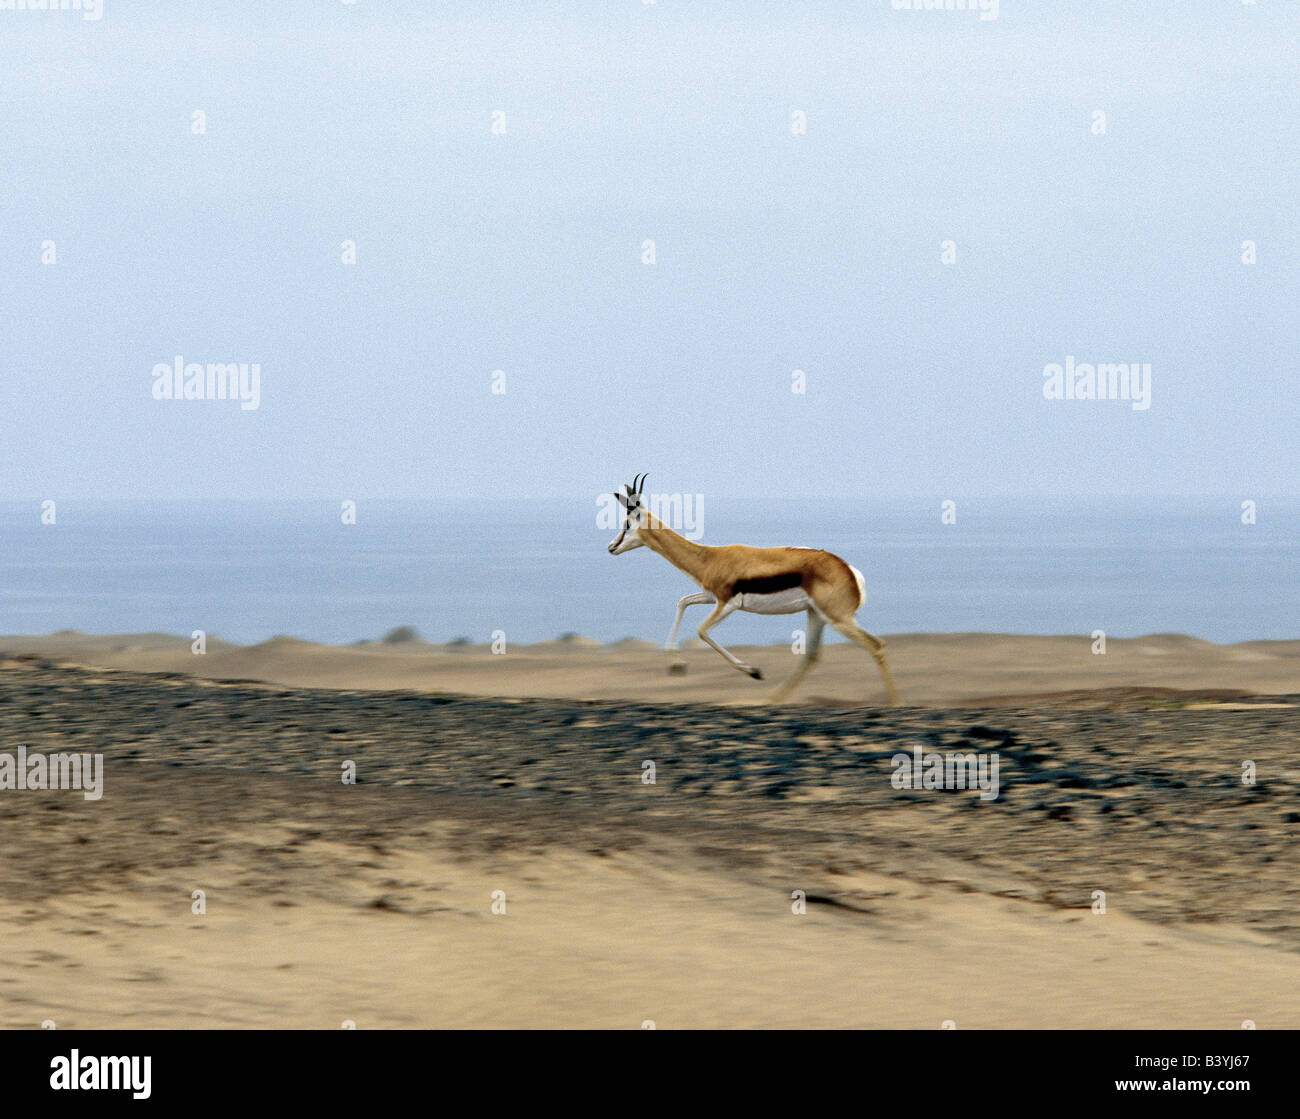 Namibia, Kunene, Skeleton Coast Park. A Springbok, a gazelle-type antelope, bounds along the barren, windswept shore of the Atlantic Ocean in the Skeleton Coast Park. Stock Photo